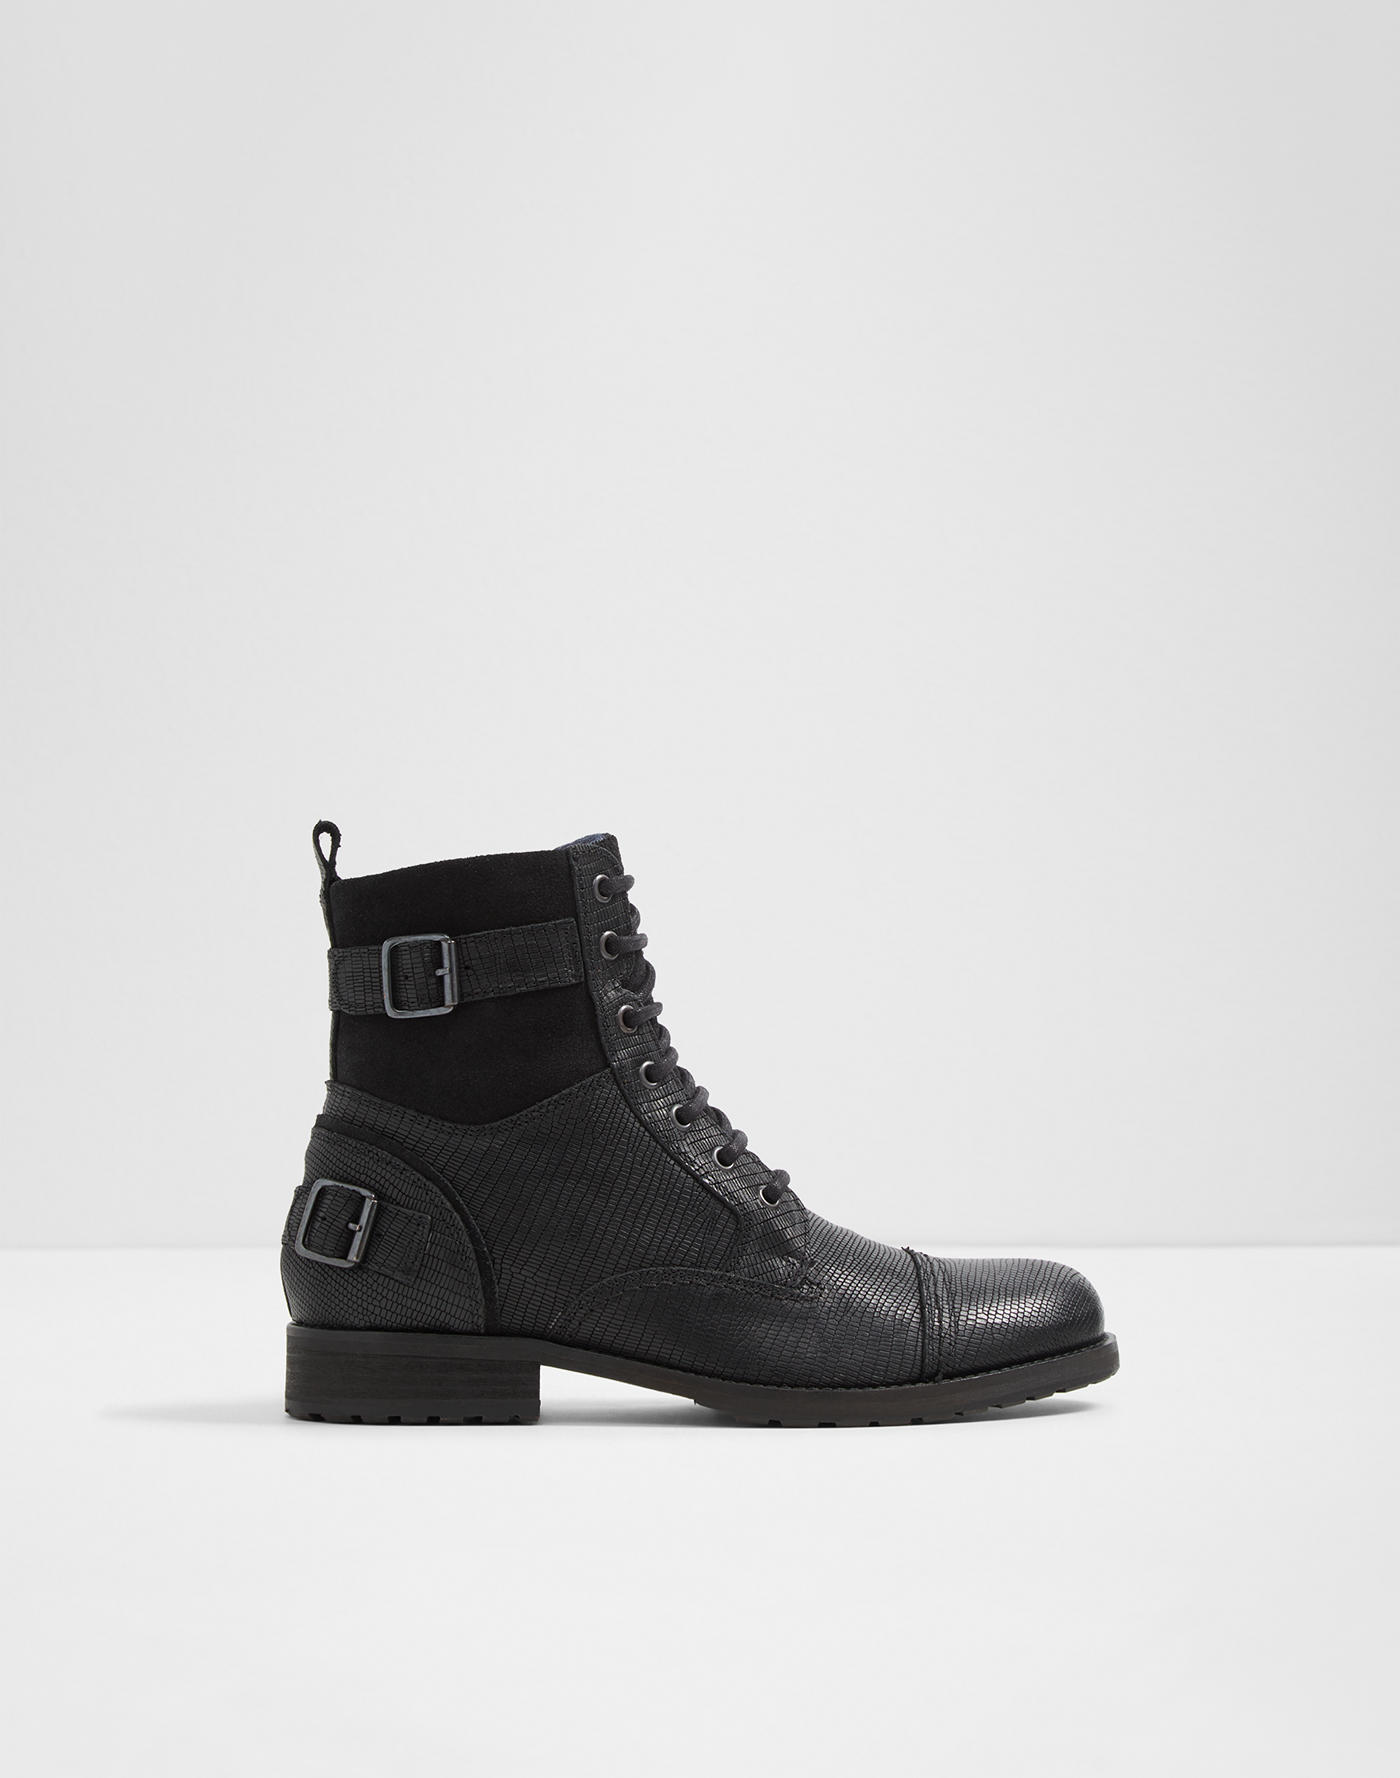 Aldo black patent boots